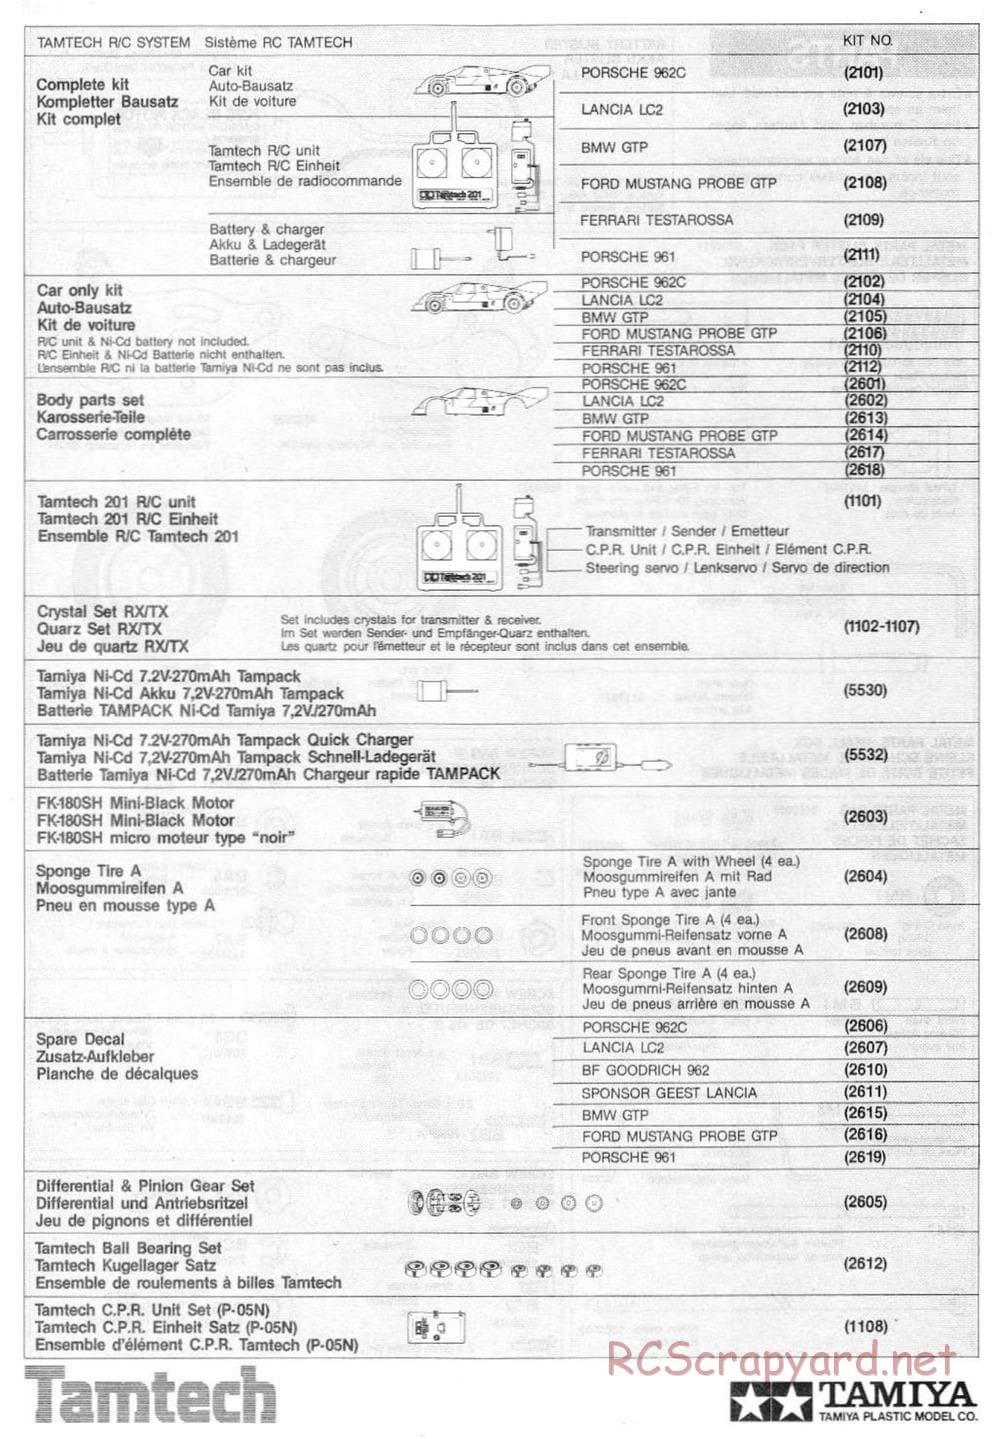 Tamiya - Tamtech - Porsche 961 Chassis - Manual - Page 18